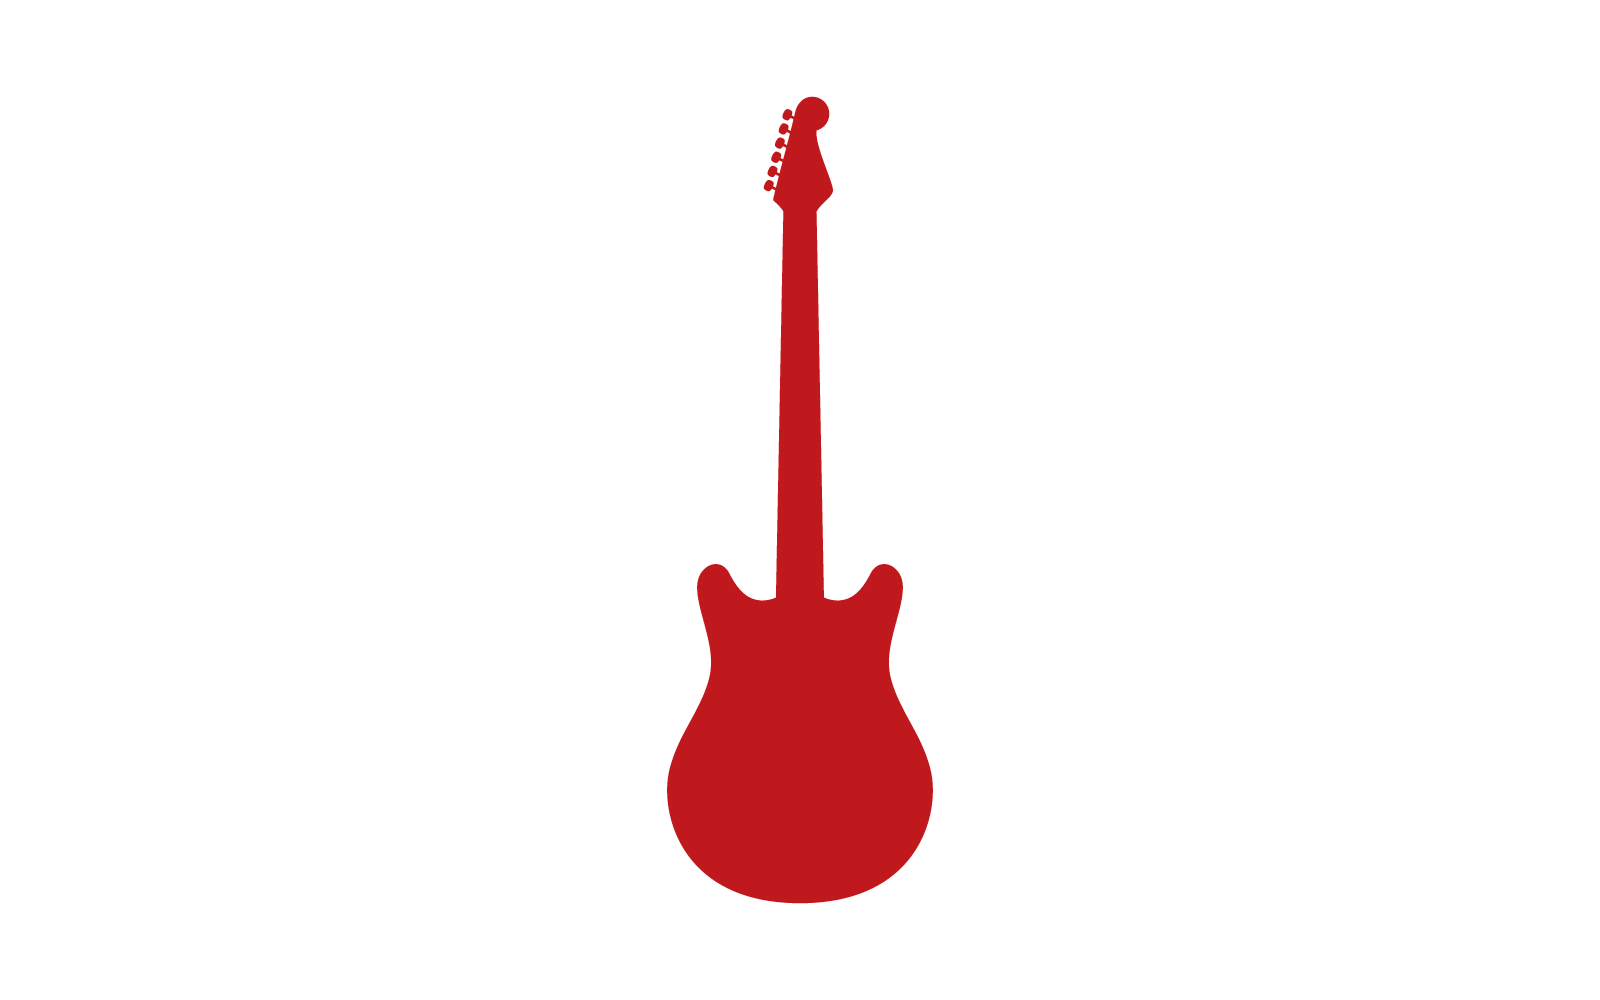 Guitar illustration design vector template